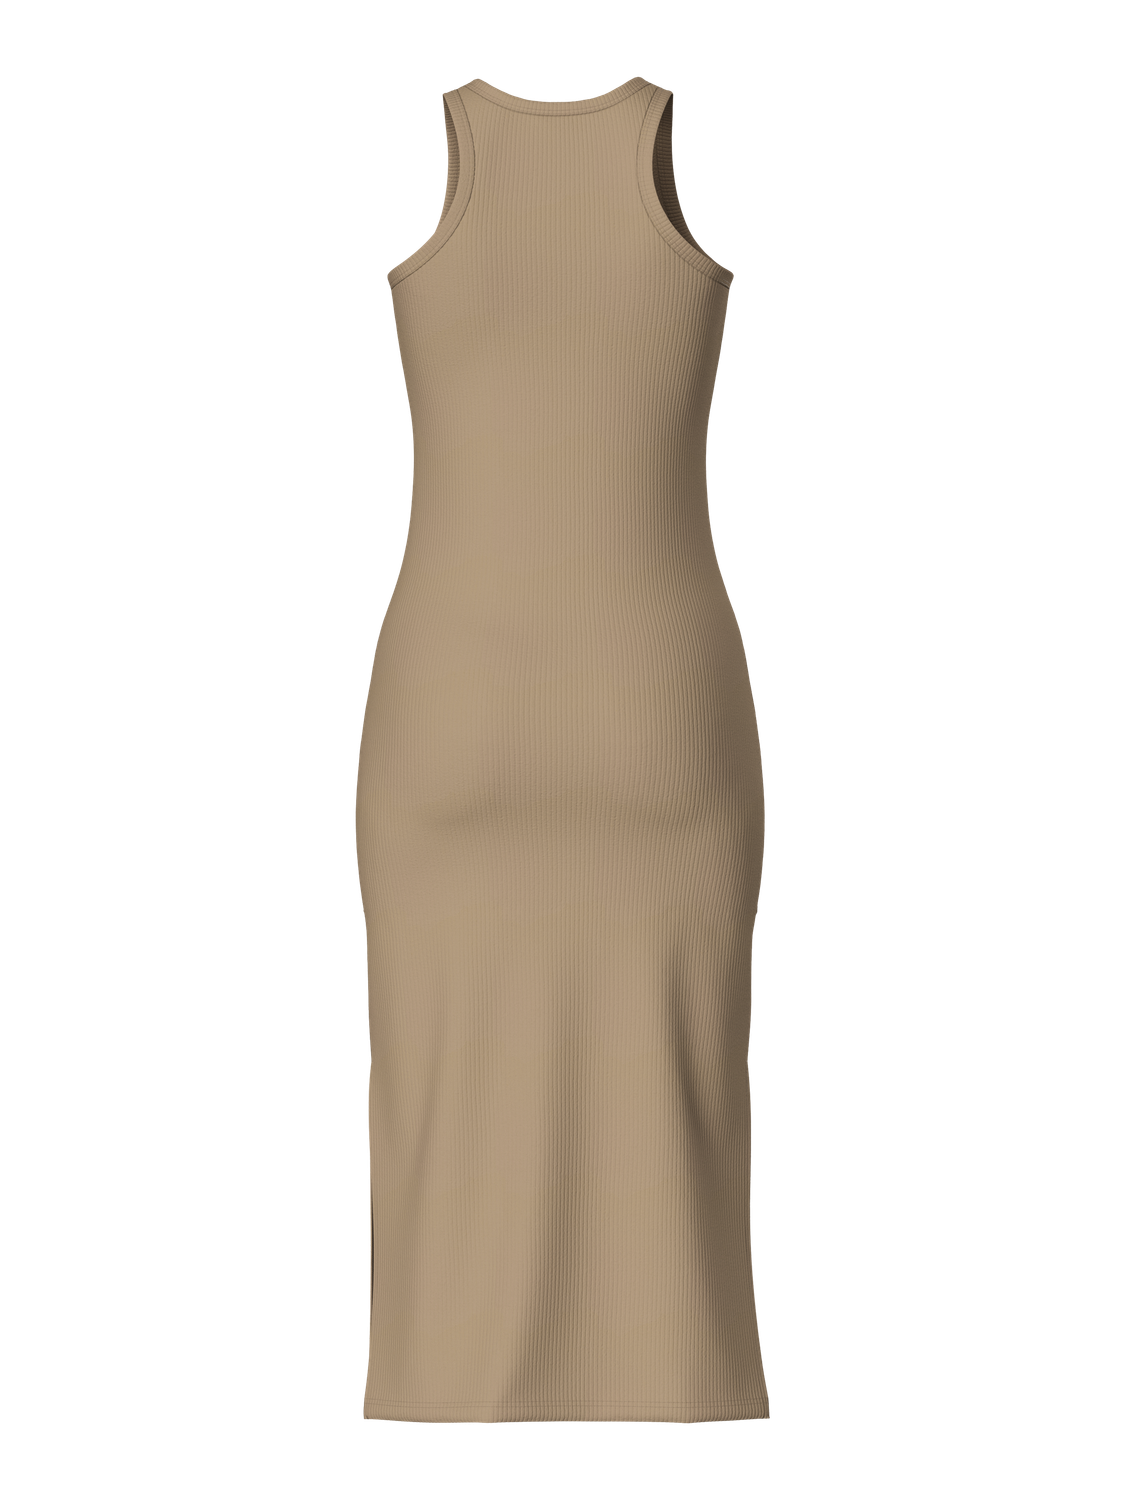 PCRUKA Dress - Silver Mink